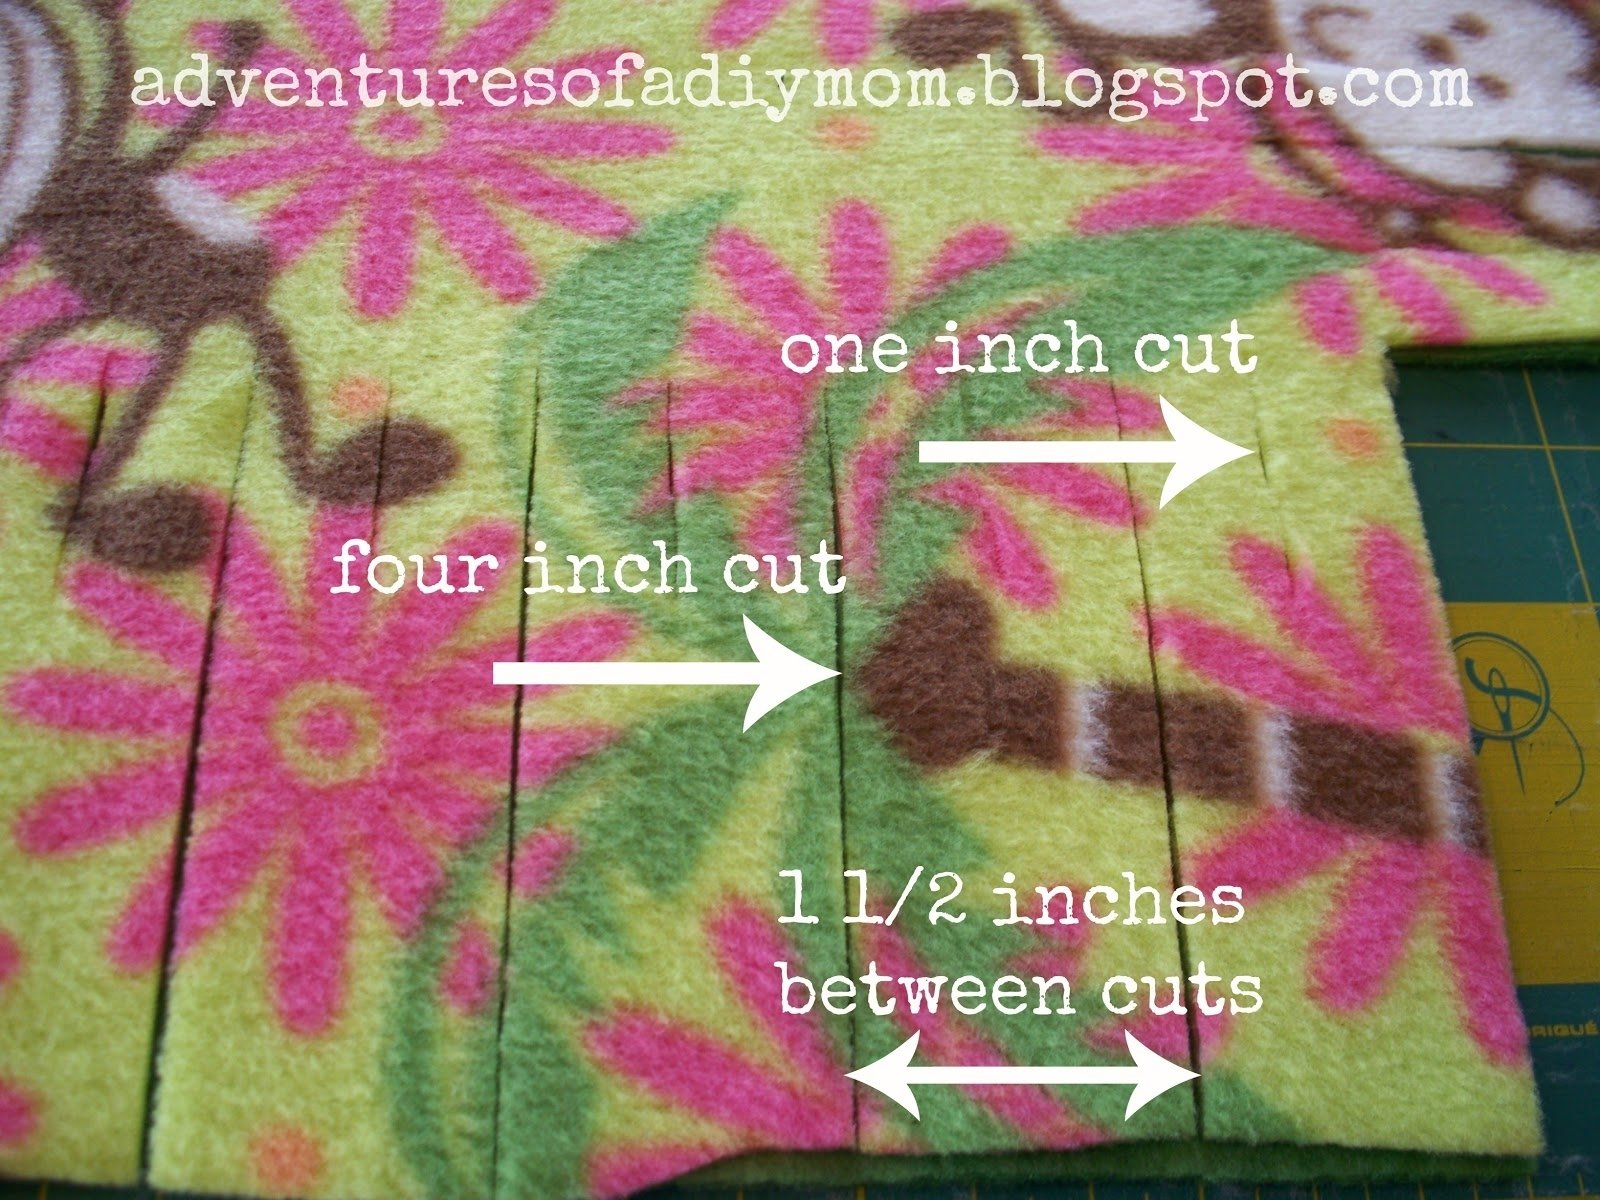 10 Nice No Sew Fleece Blanket Ideas how to make a no sew fleece blanket adventures of a diy mom 2022